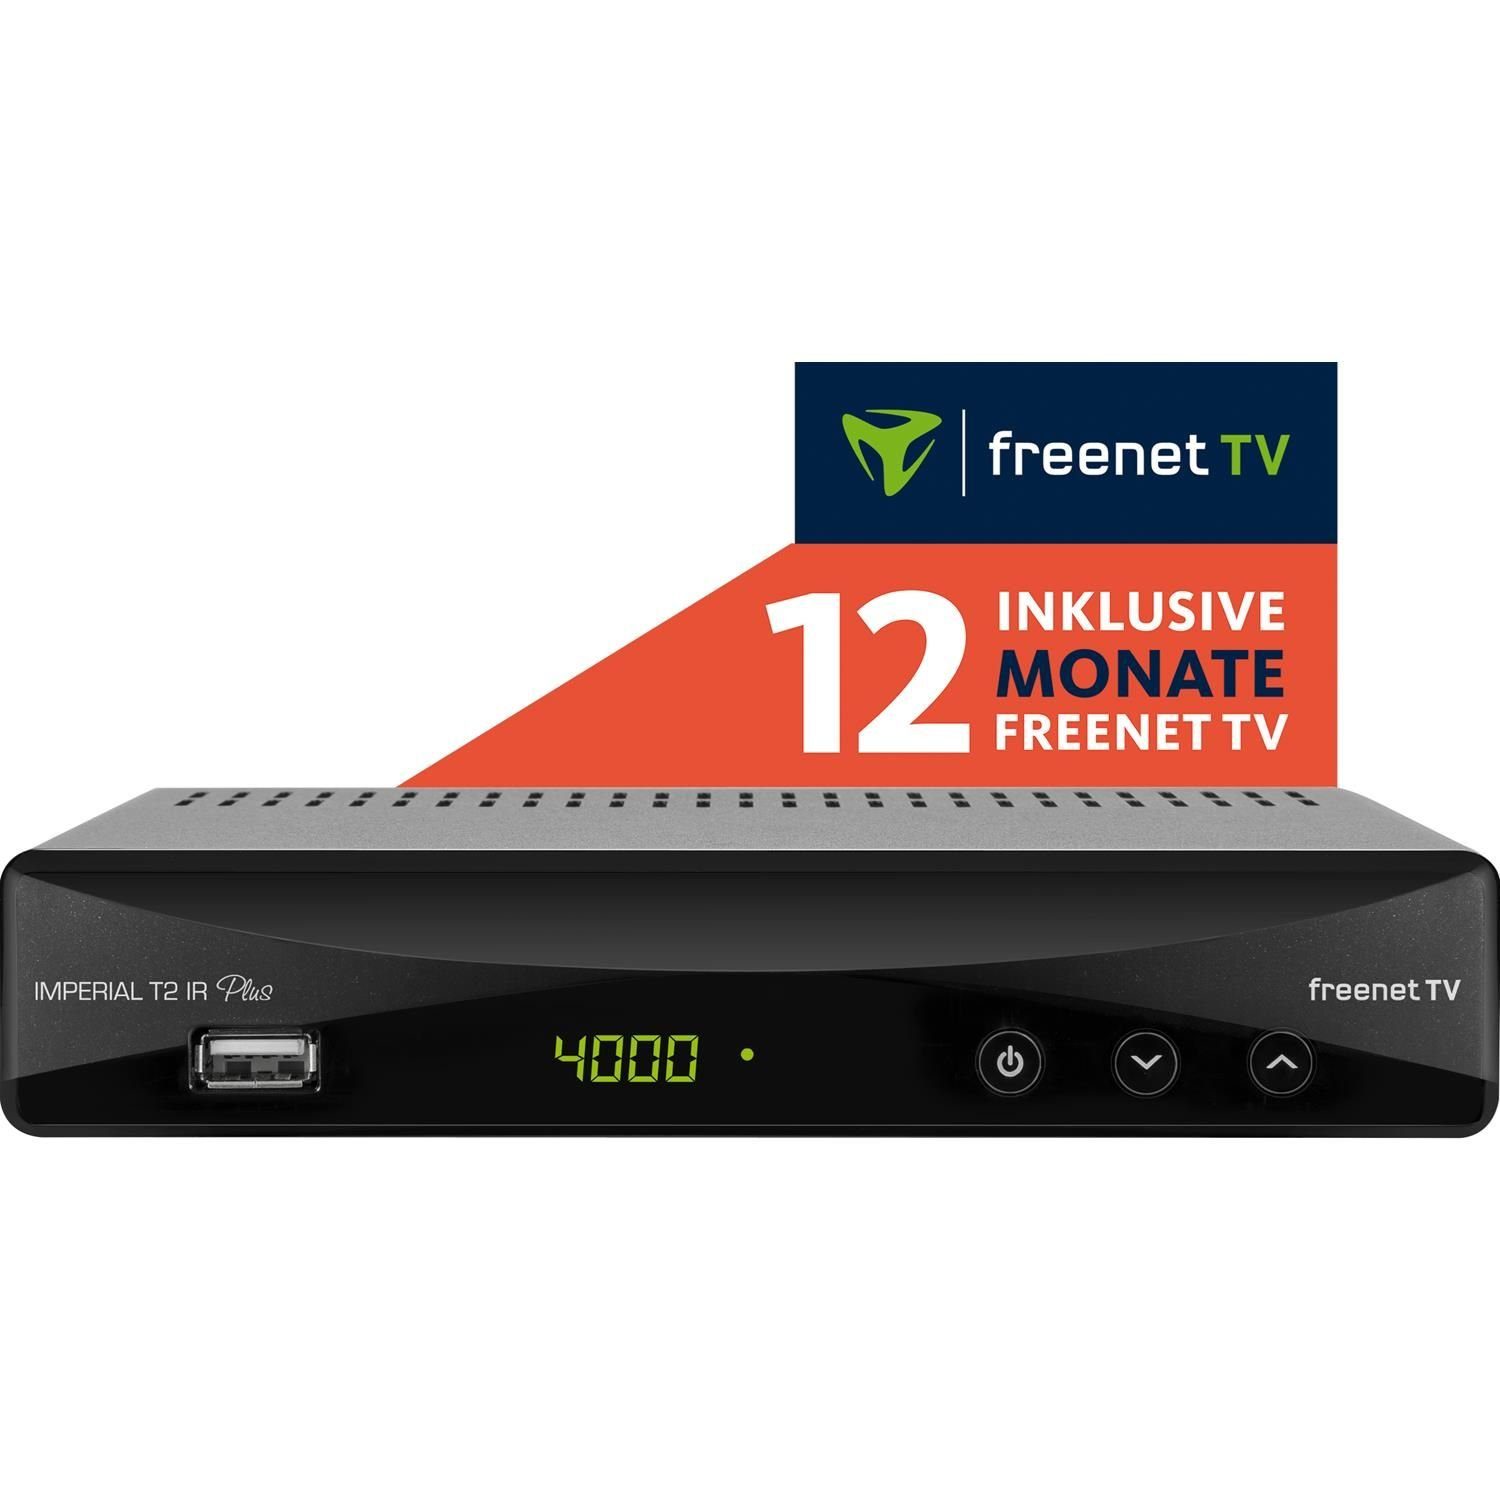 Netzwerkbuchse, Monate DVB-T2 T2 HD inkl. IMPERIAL Formate) Mediaplayer TV¹ für 12 freenet HD (RJ45 DVB-T2 Receiver IR TELESTAR Receiver diverse Plus by